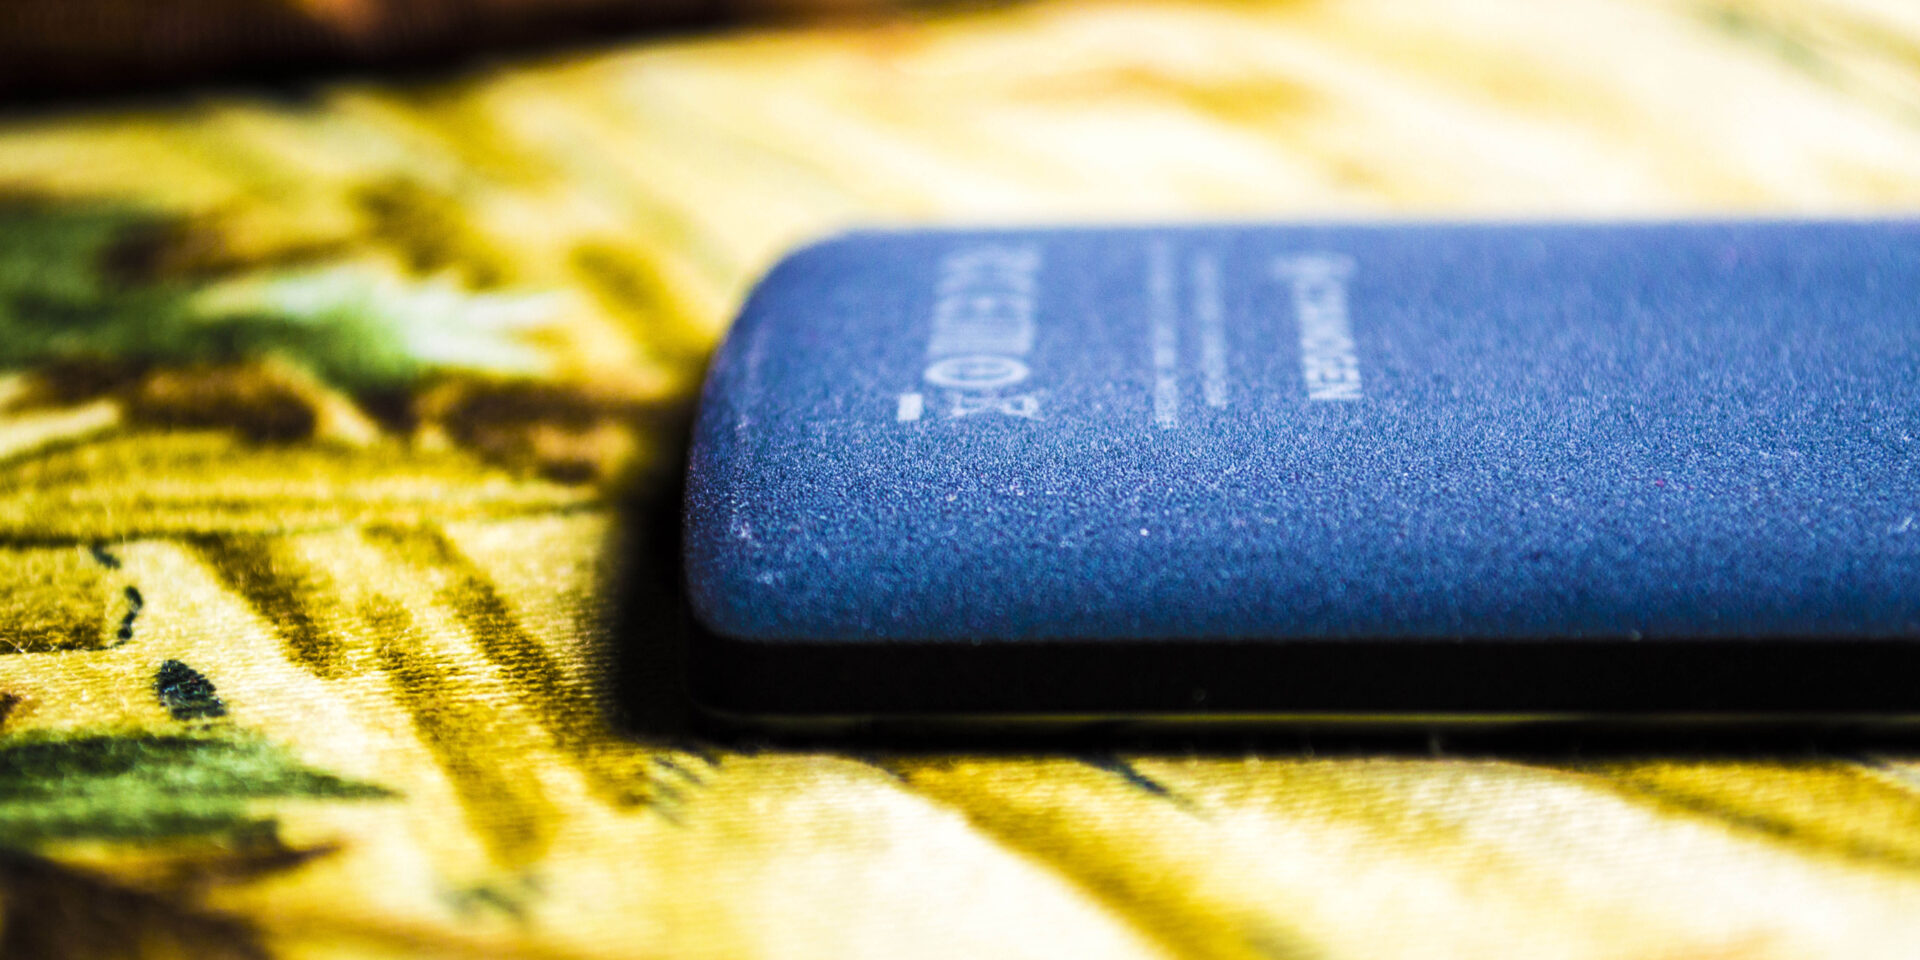 OnePlus One CM 13 Marshmallow update